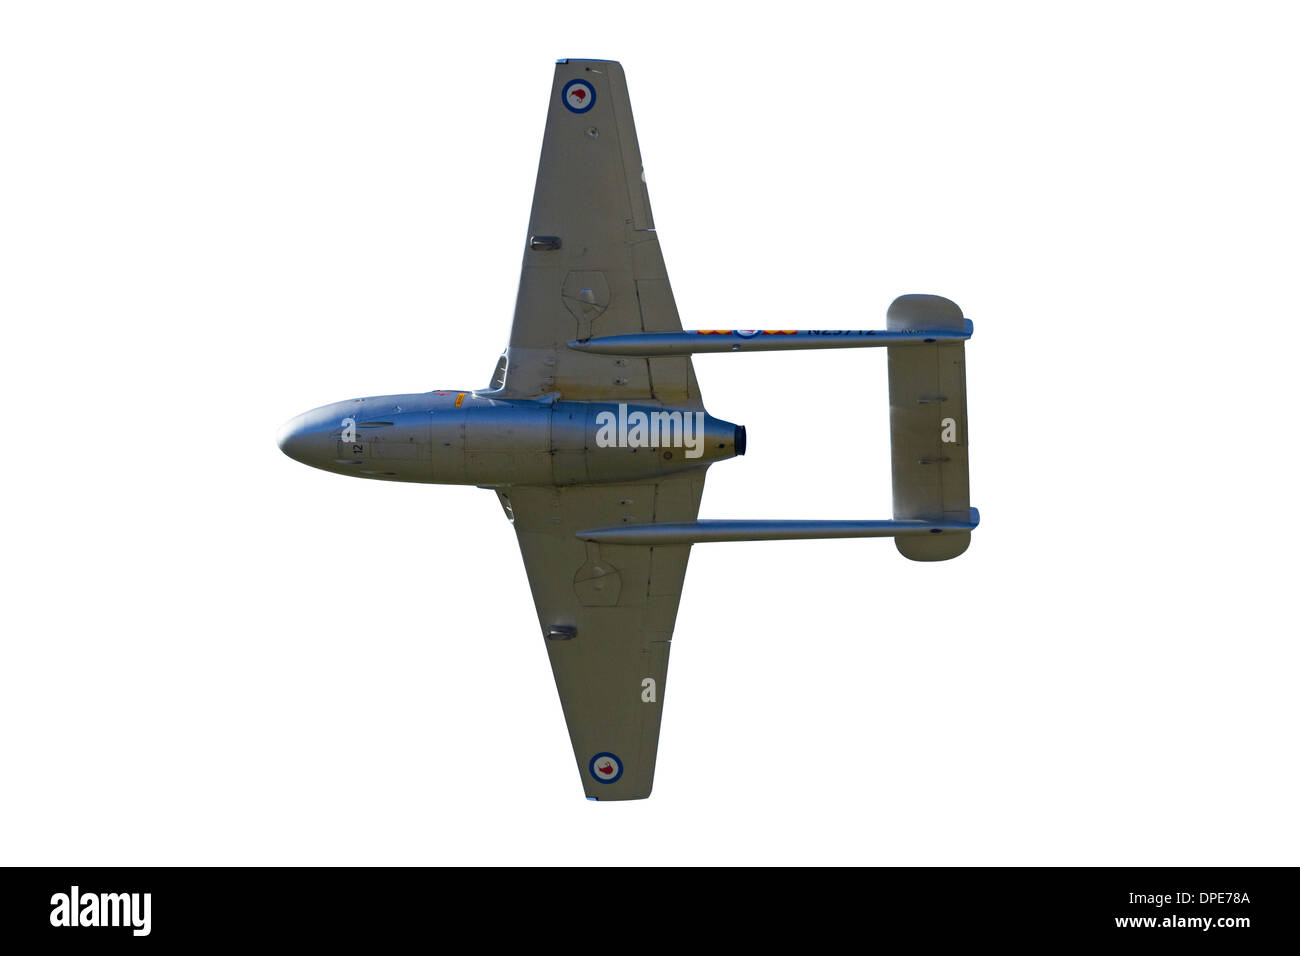 De Havilland Vampire de découpe jet d'avions d'attaque Banque D'Images